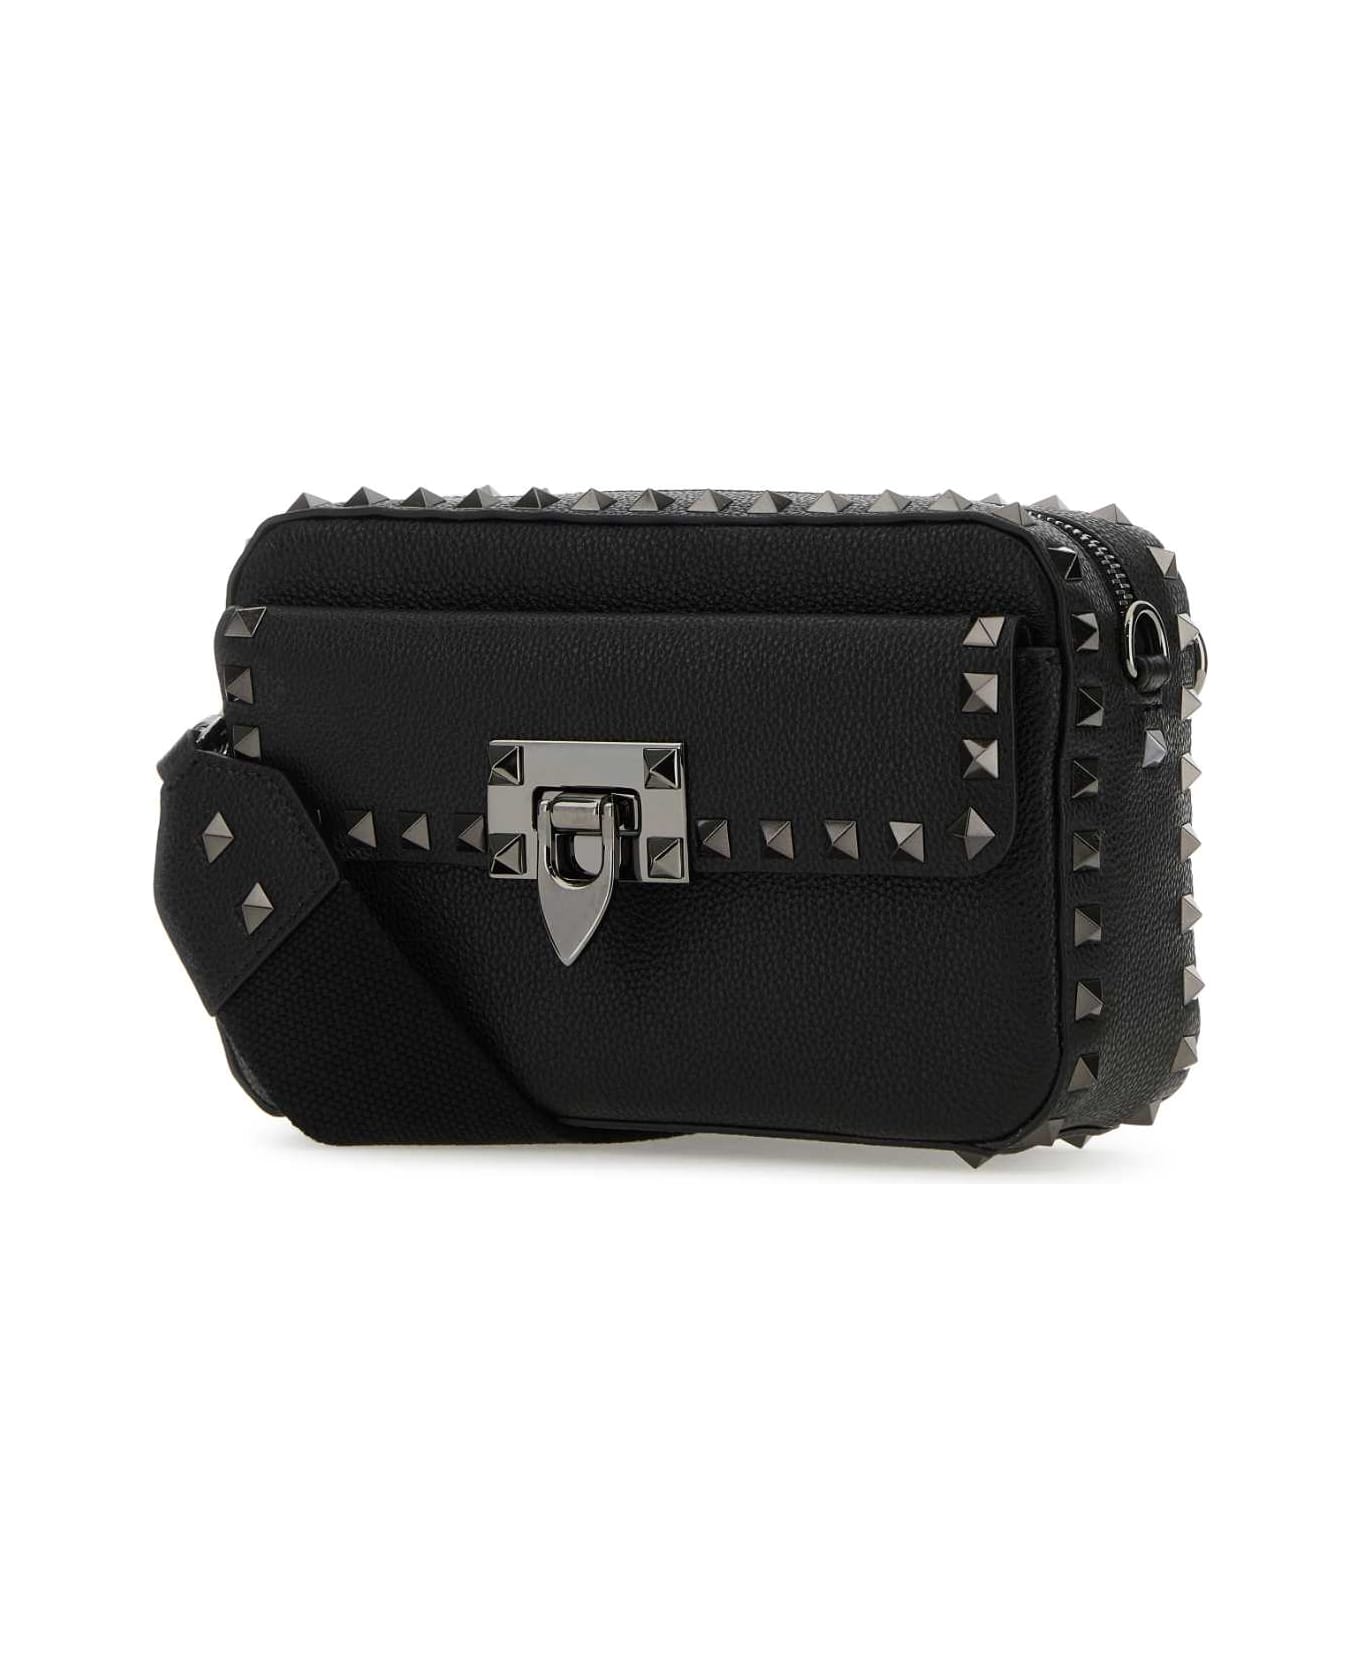 Valentino Garavani Black Leather Rockstud Crossbody Bag - NERO